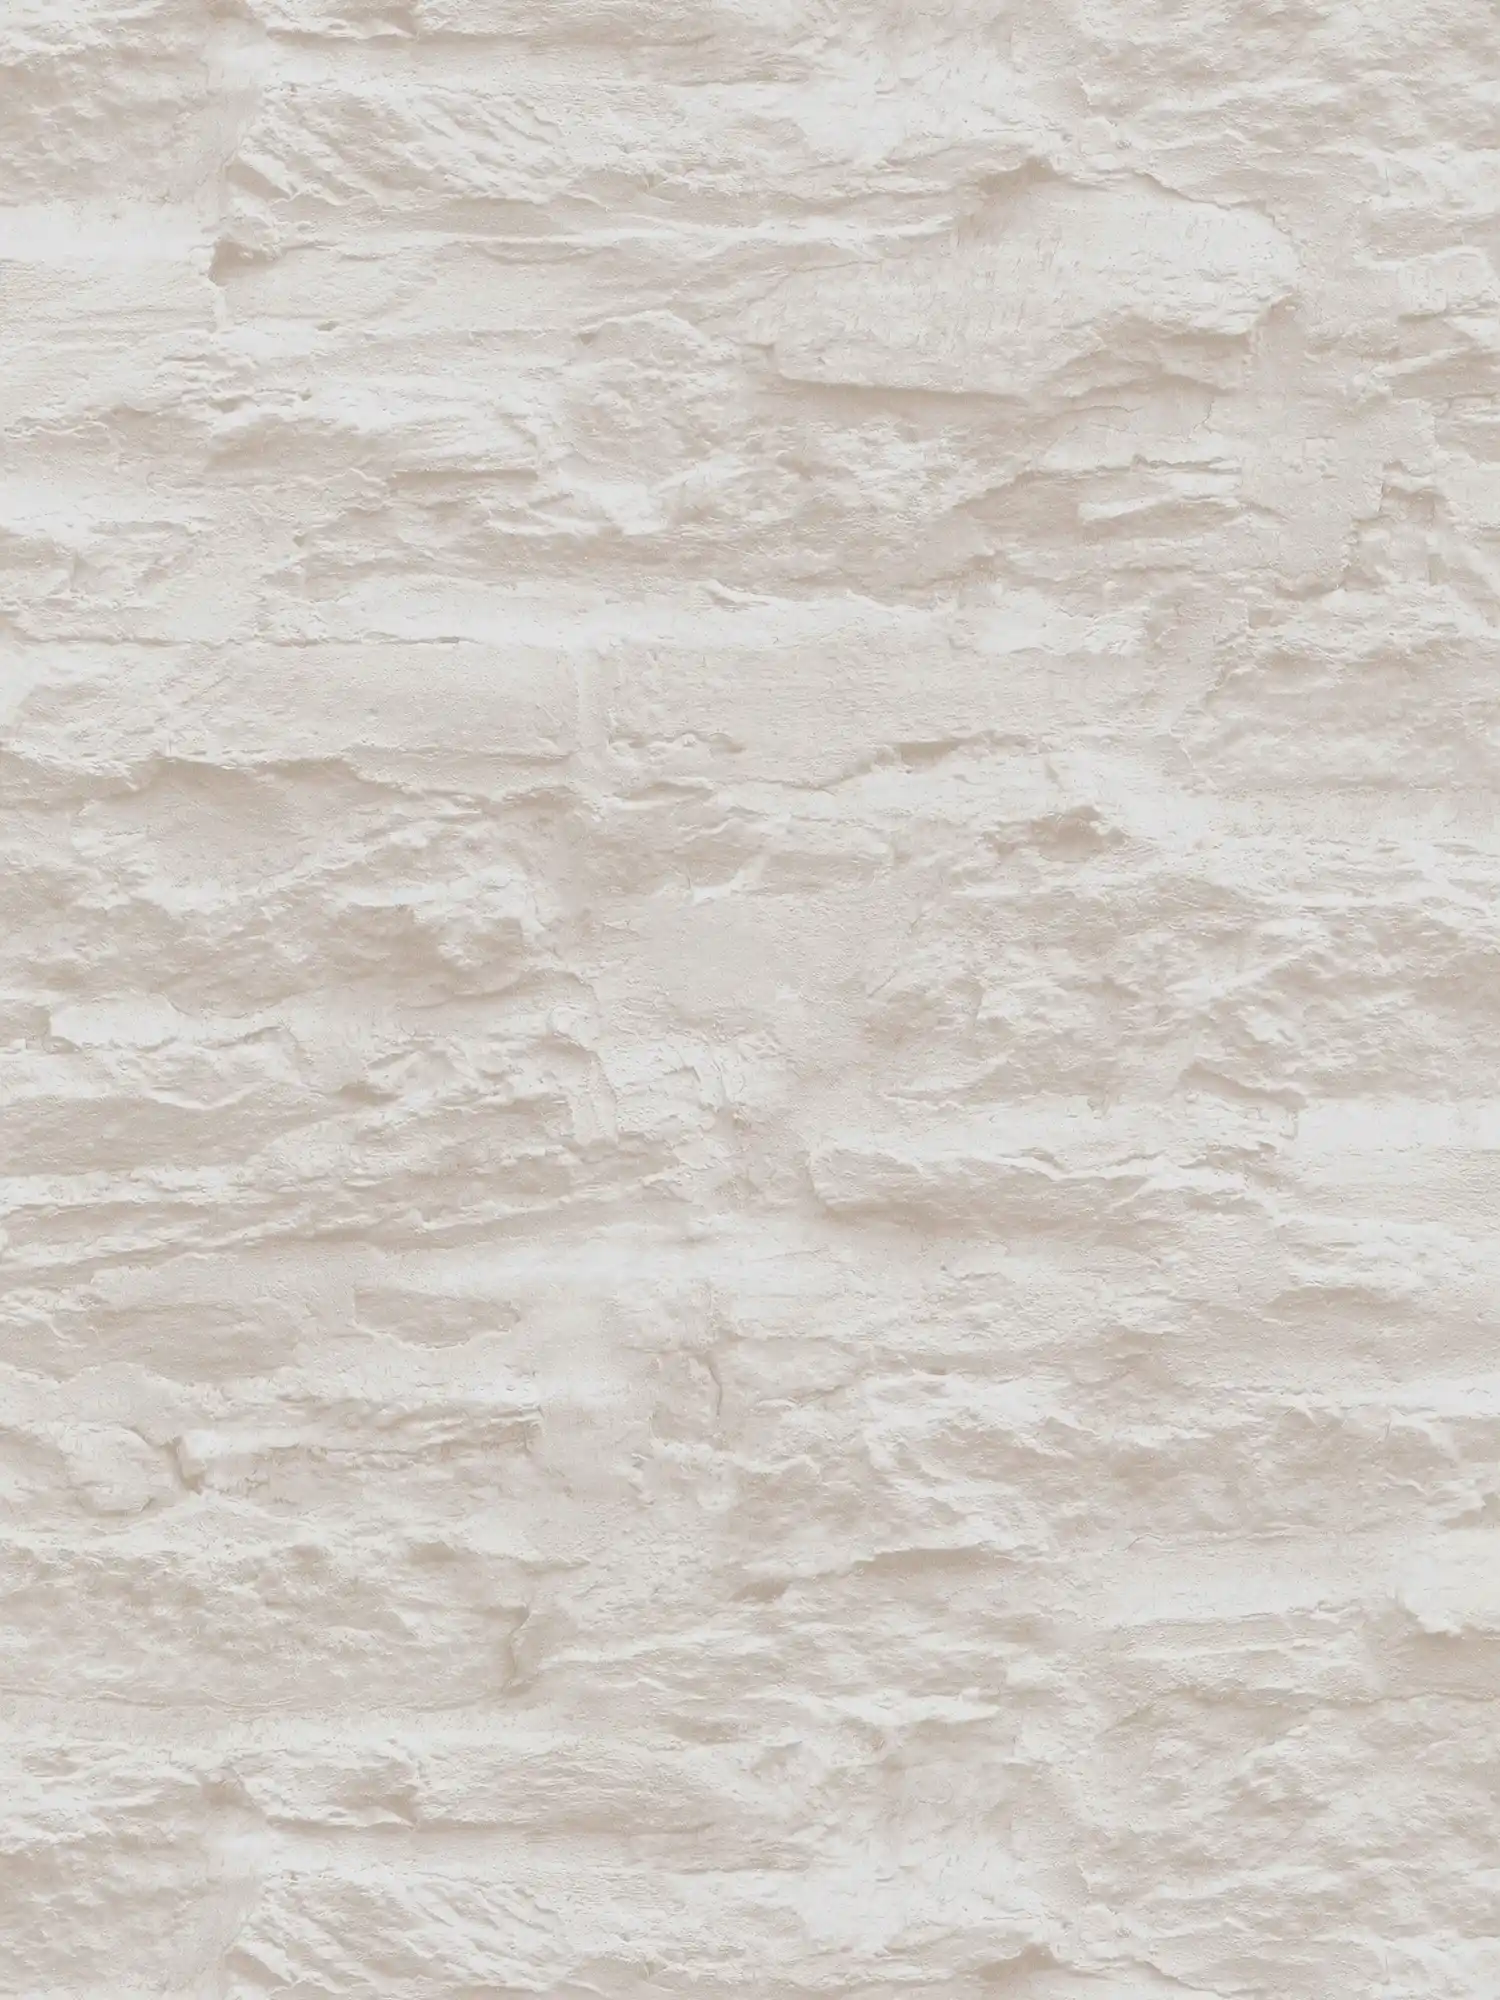 Self-adhesive wallpaper | wall optics with natural stone & plaster - cream, white
